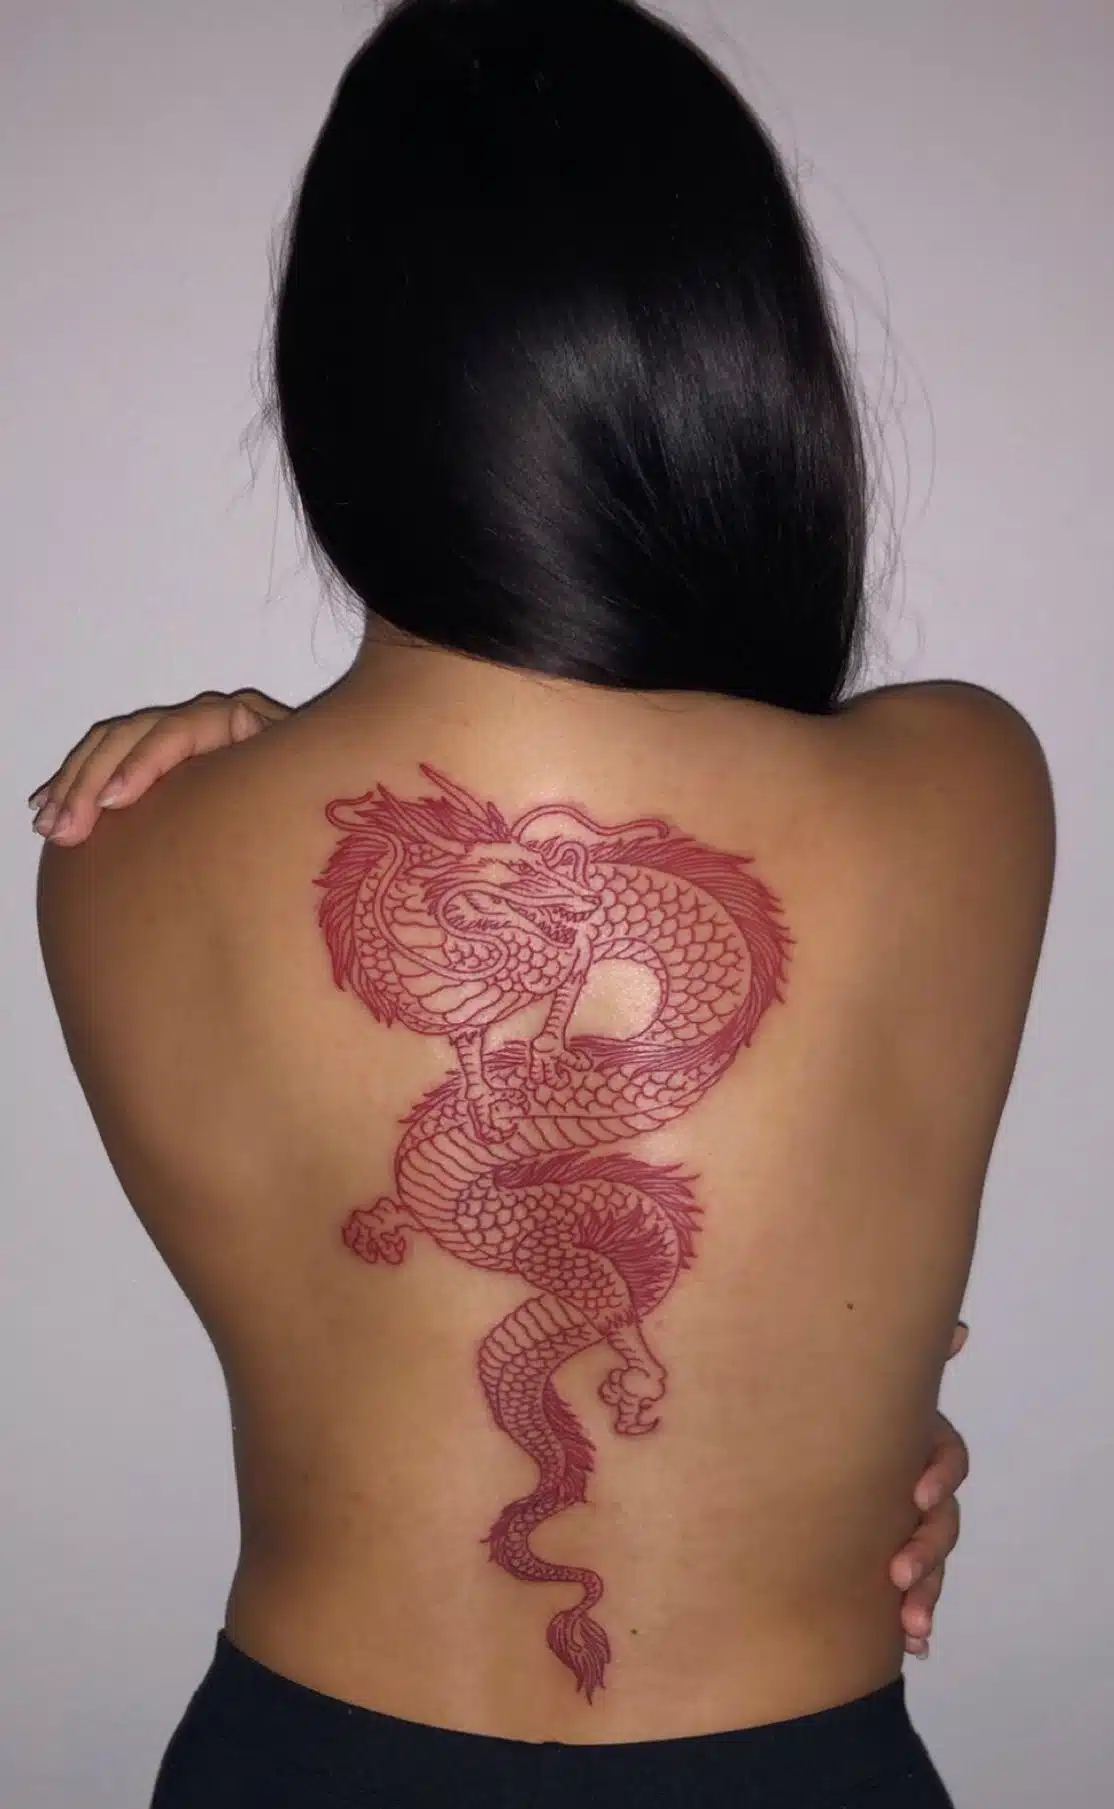 The Girl with the Dragon Tattoo - AI Generated Artwork - NightCafe Creator